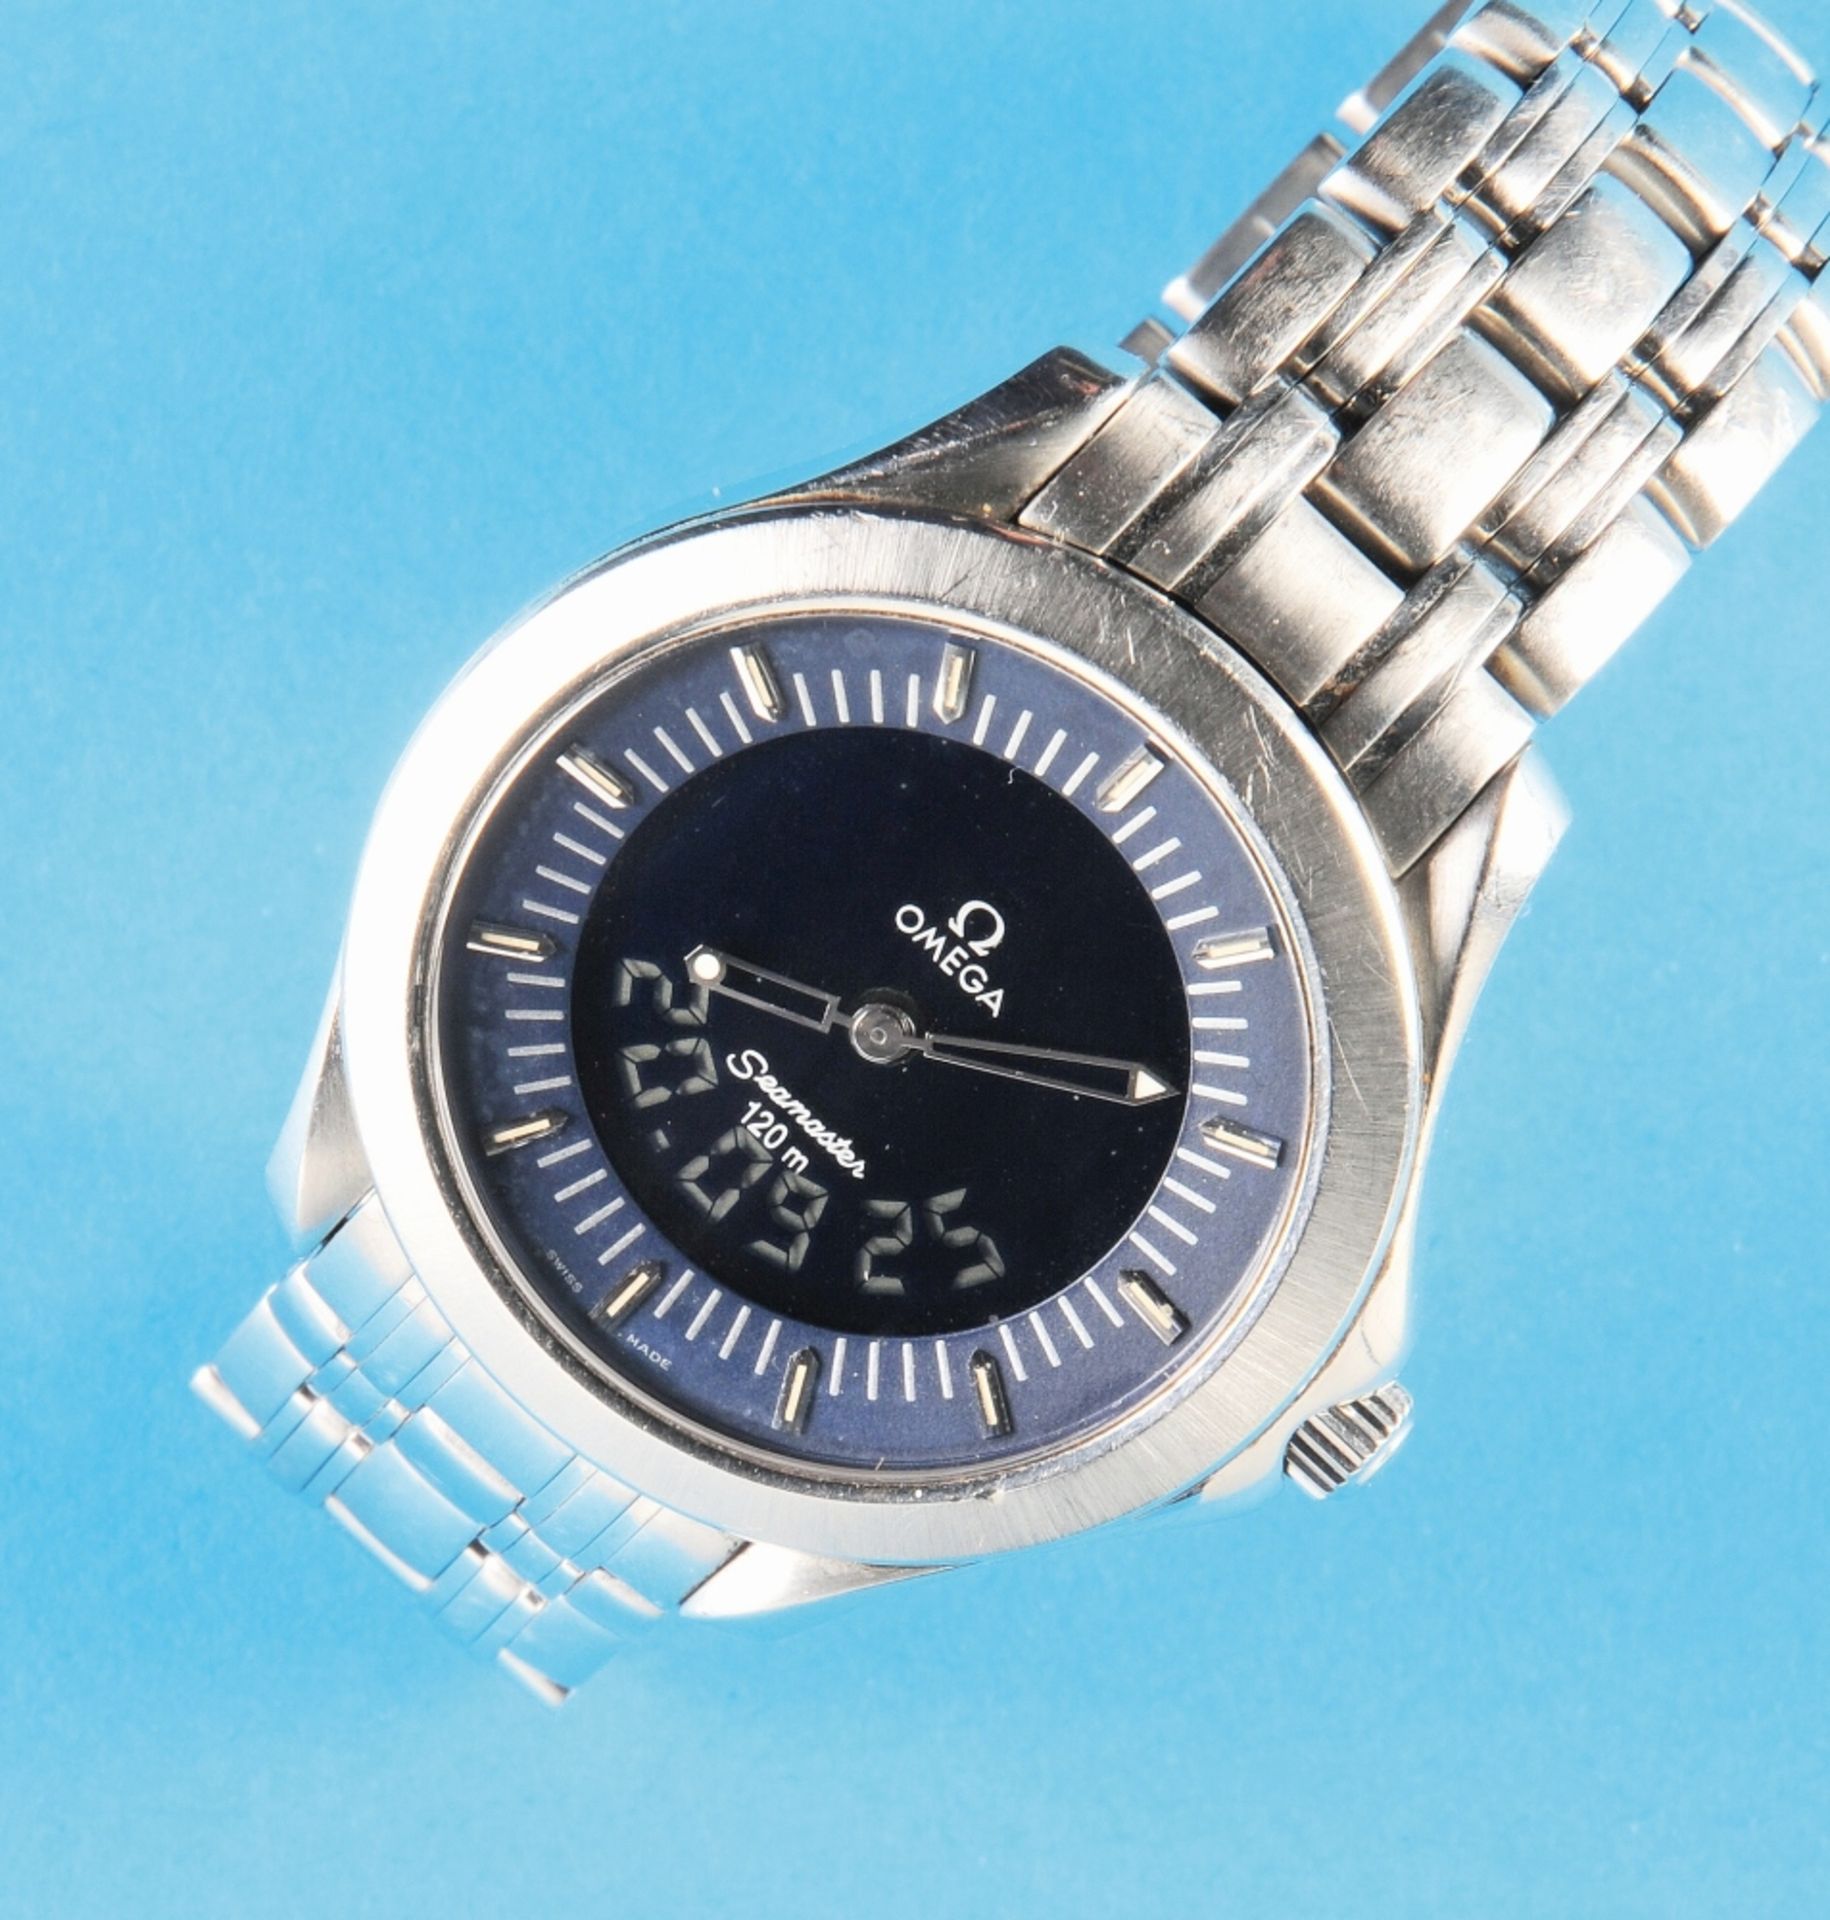 Omega Seamaster 120 m Digital Quartz multifunction wristwatch chronograph with analog hour indicatio